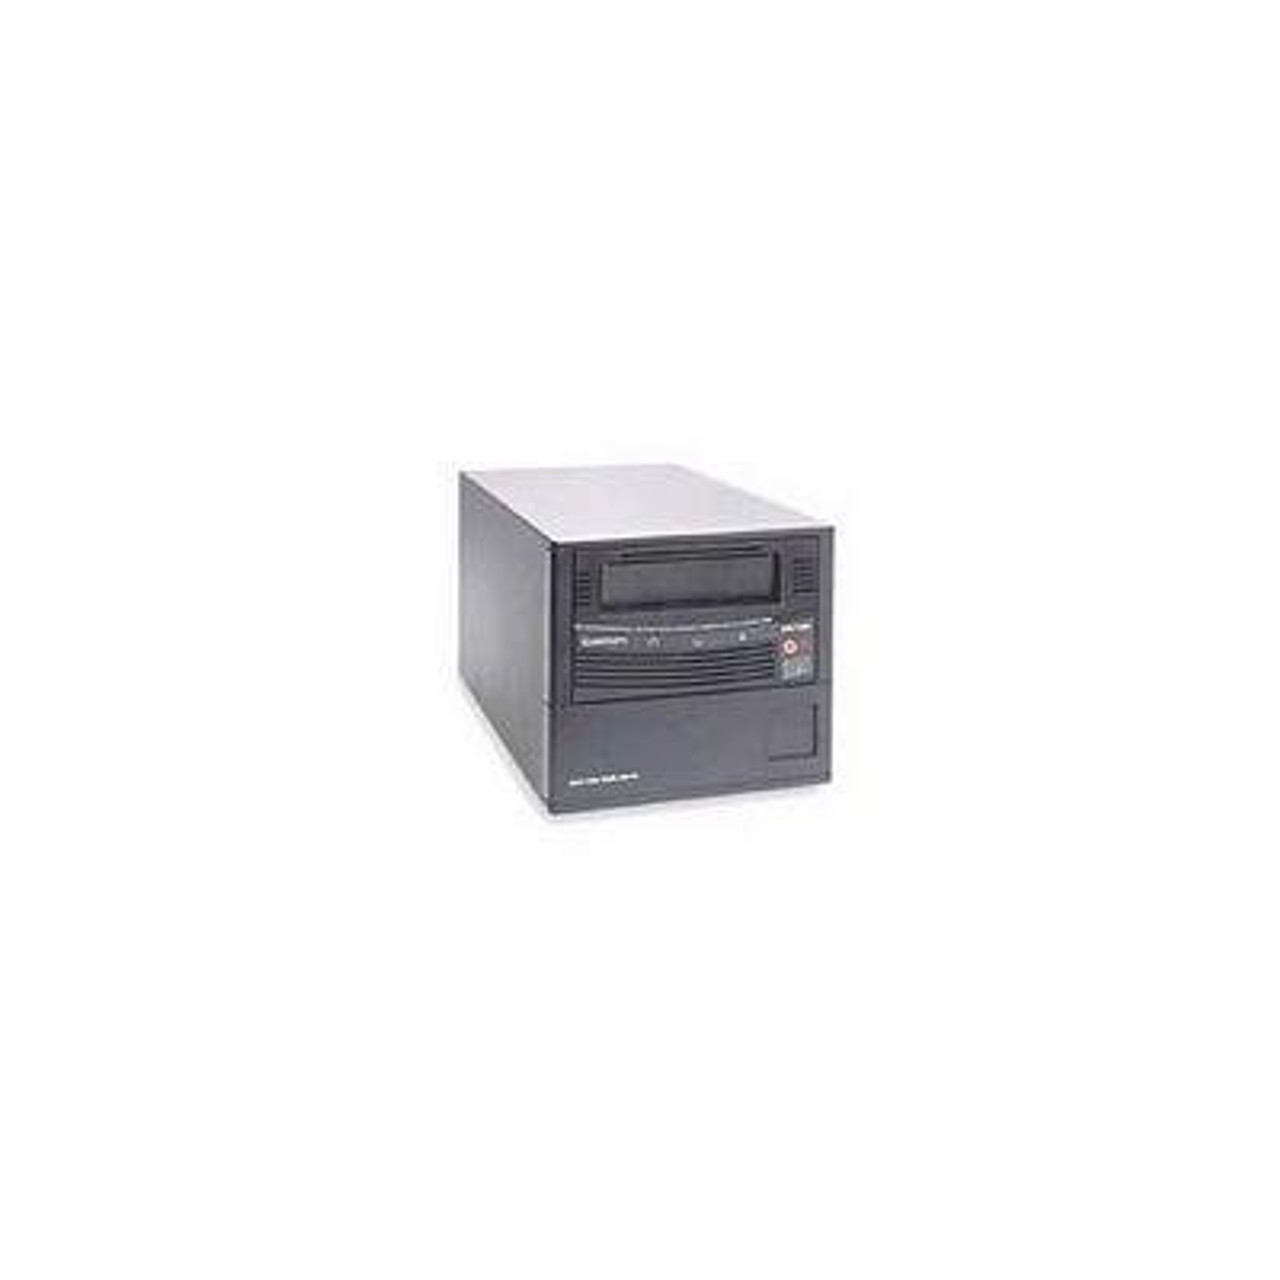 TR-S34BX-EY - Quantum Super DLTtape SDLT-600 External Tape Drive - 300GB (Native)/600GB (Compressed) - External